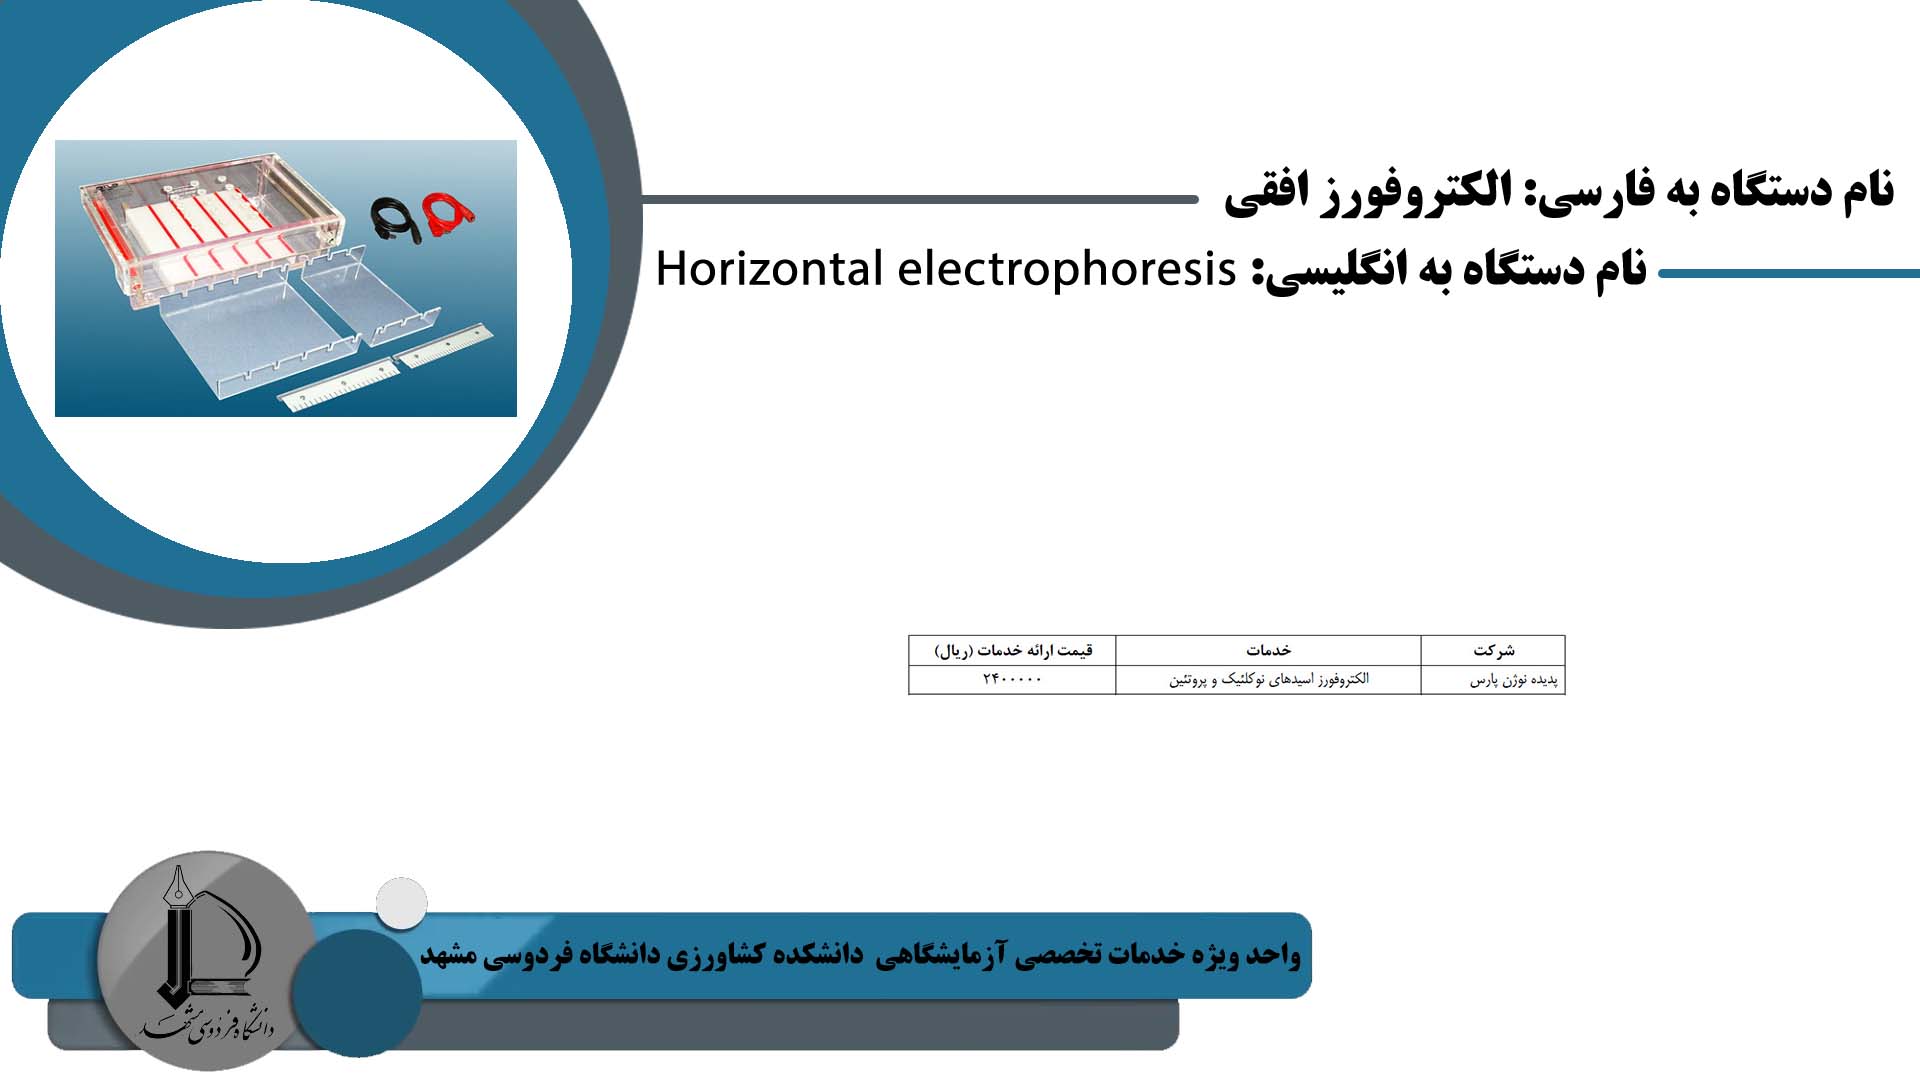 Horizontal electrophoresis